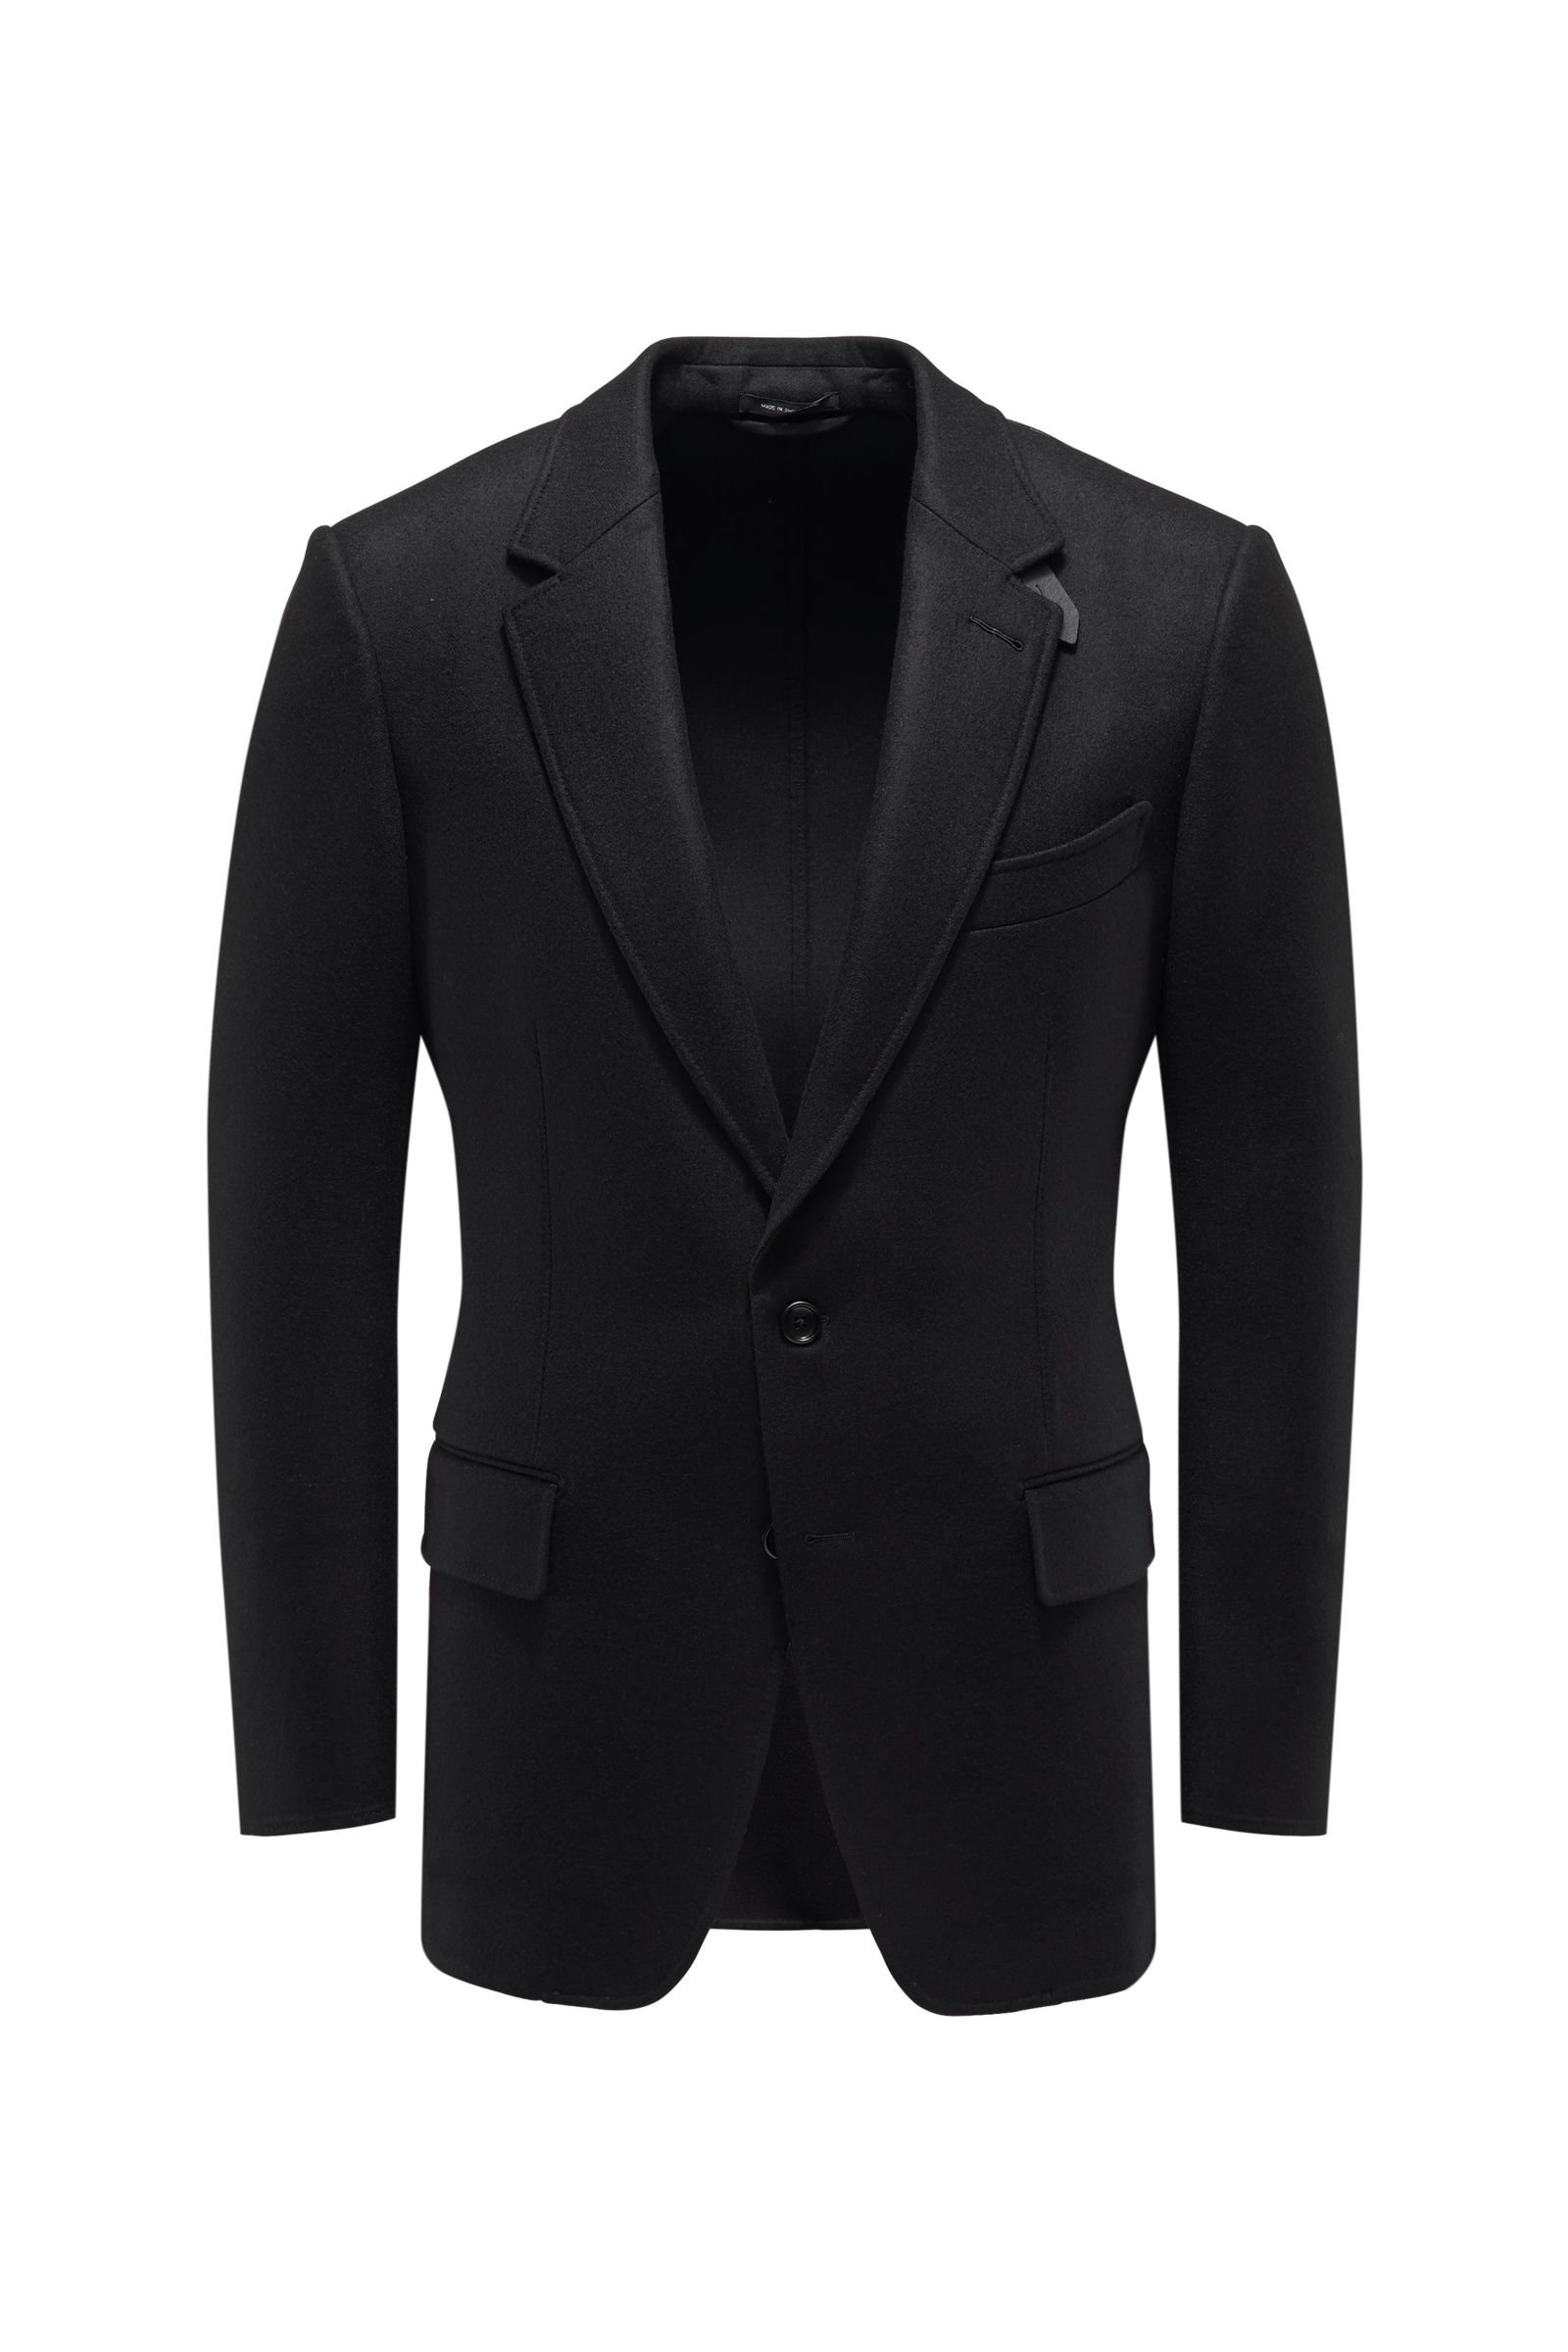 Smart-casual jacket black